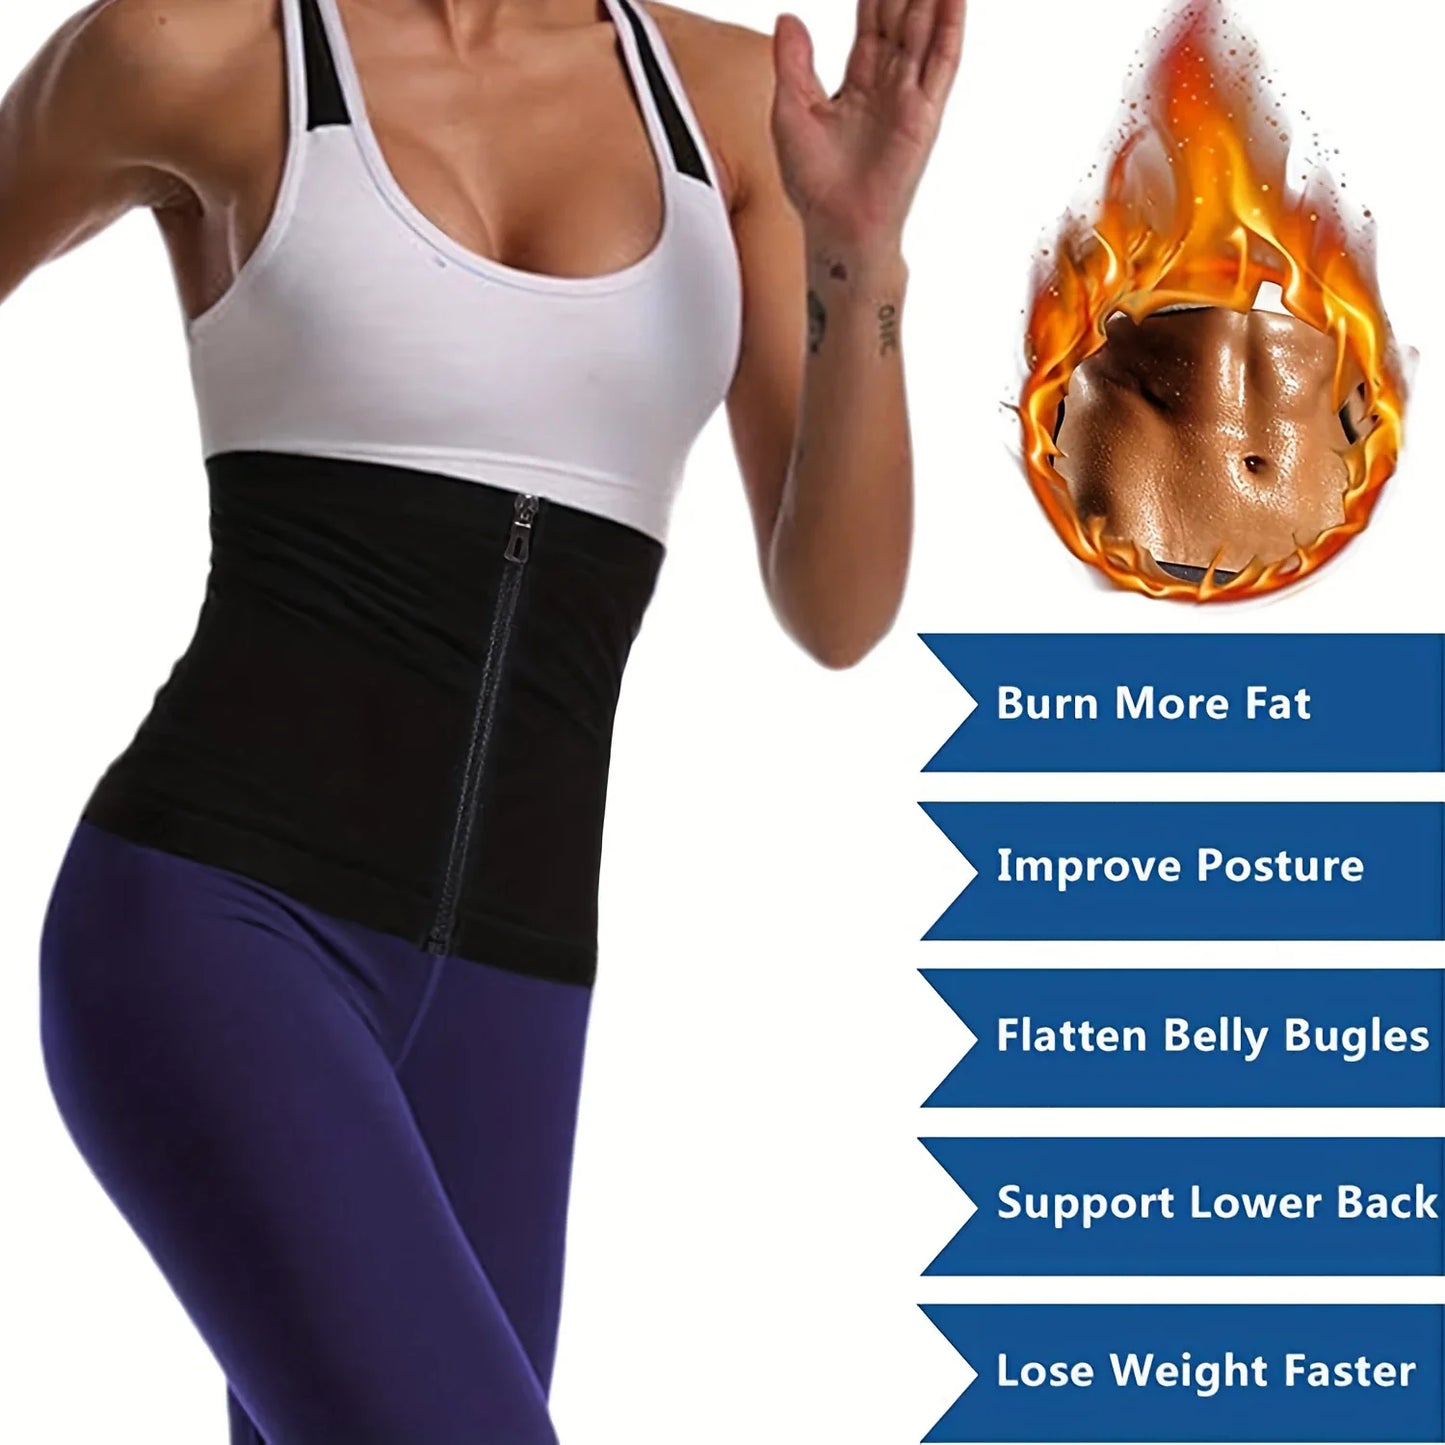 Sweat Waist Trainer Sauna Belt Sweat Shapewear Sports PU(Polyurethane) Home Workout Fitness Gym Workout Weight Loss Hot Sweat Fat Burning For Women's Waist